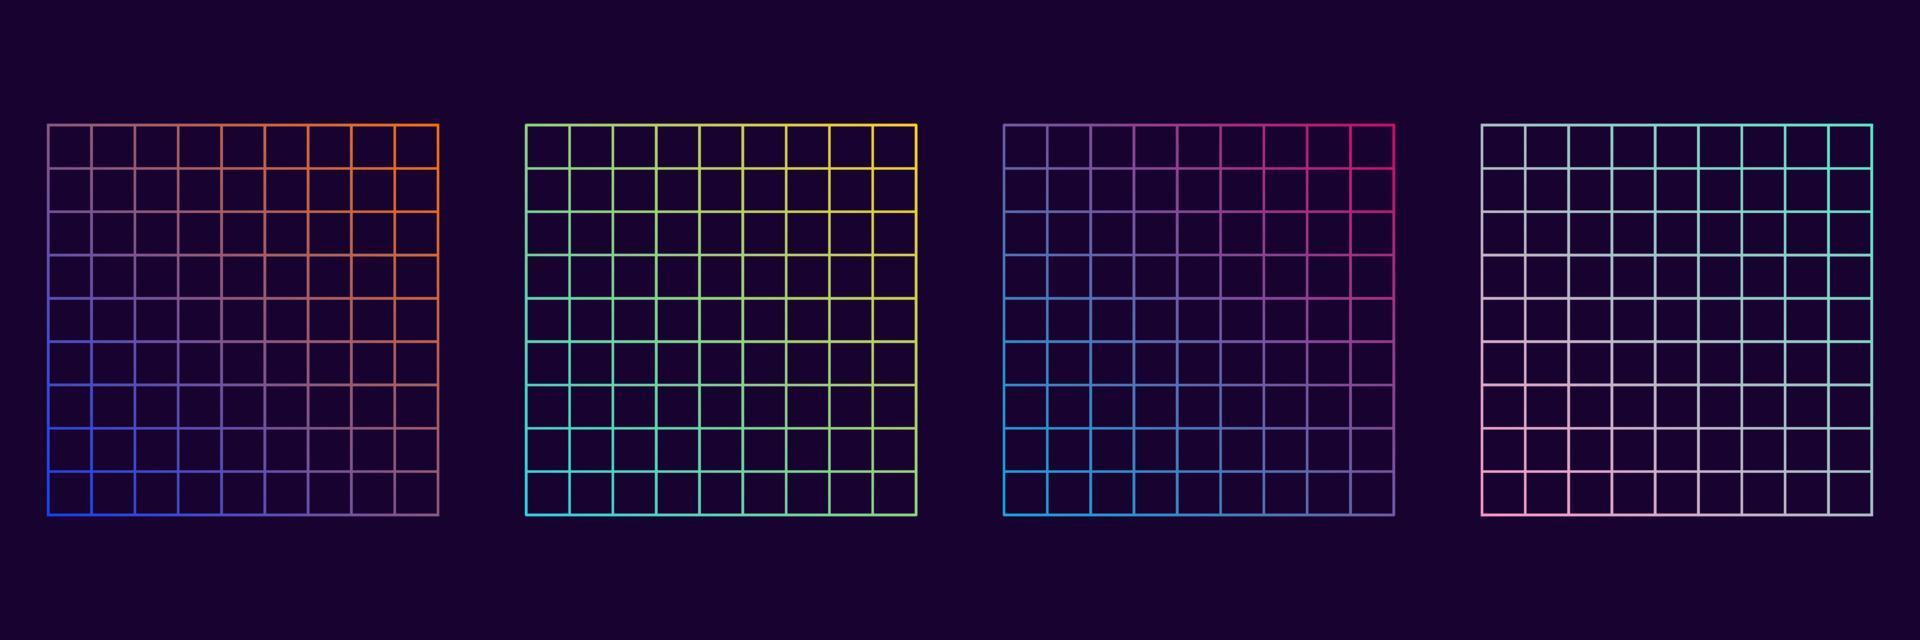 Trendy retro 1980s, 90s style. Wave Ripple Perspective Square. Distorted Grid Square Neon Pattern. Warp Futuristic Geometric Square Glitch. Abstract Modern Design. Isolated Vector Illustration.